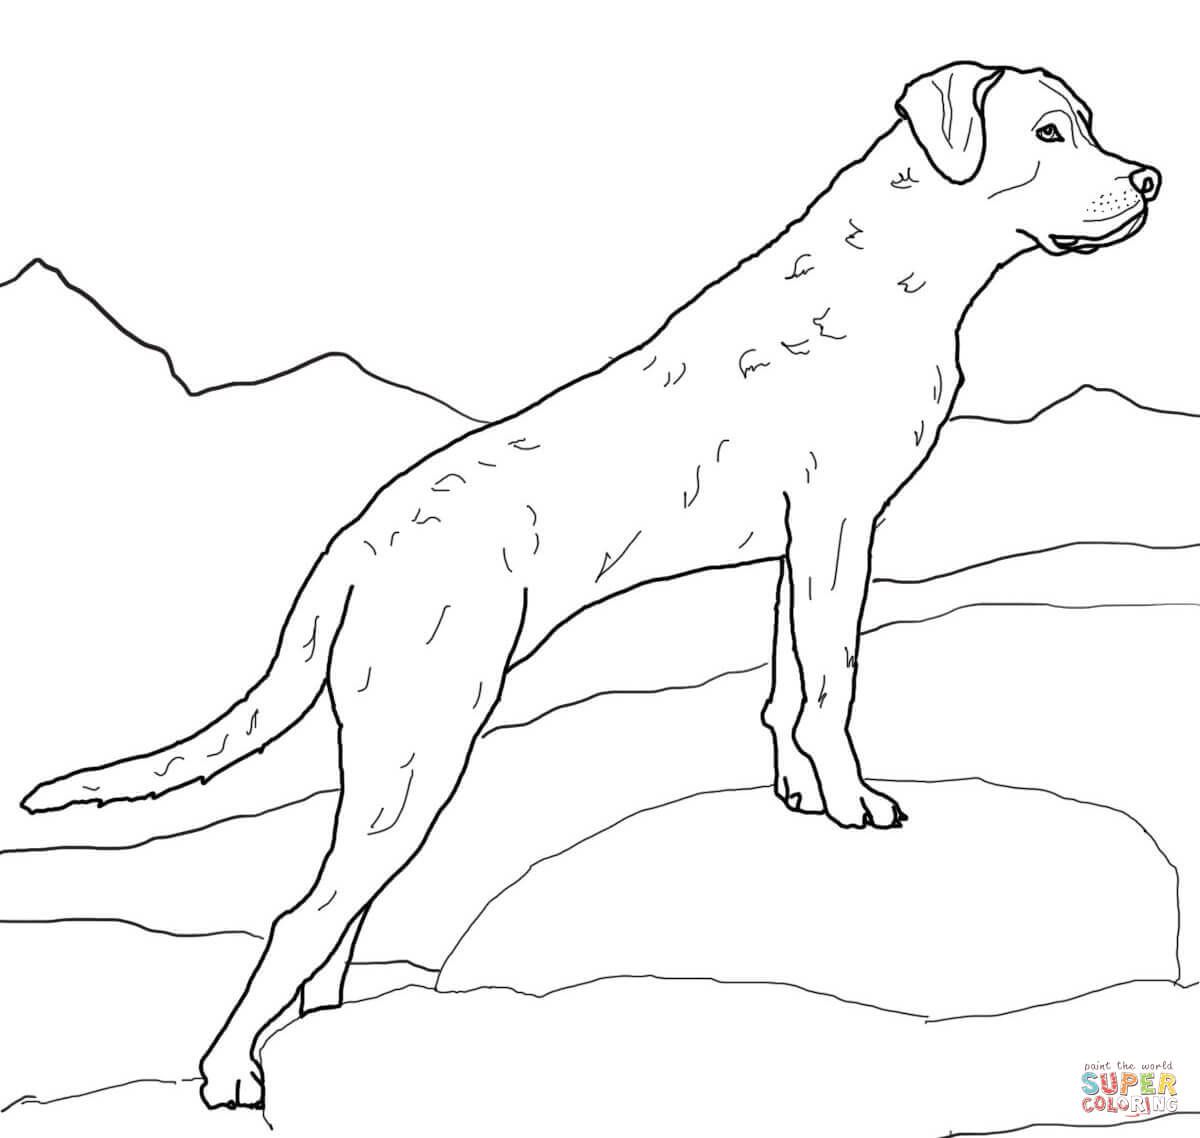 Labrador retriever coloring page free printable coloring pages dog coloring page golden retriever colors puppy coloring pages